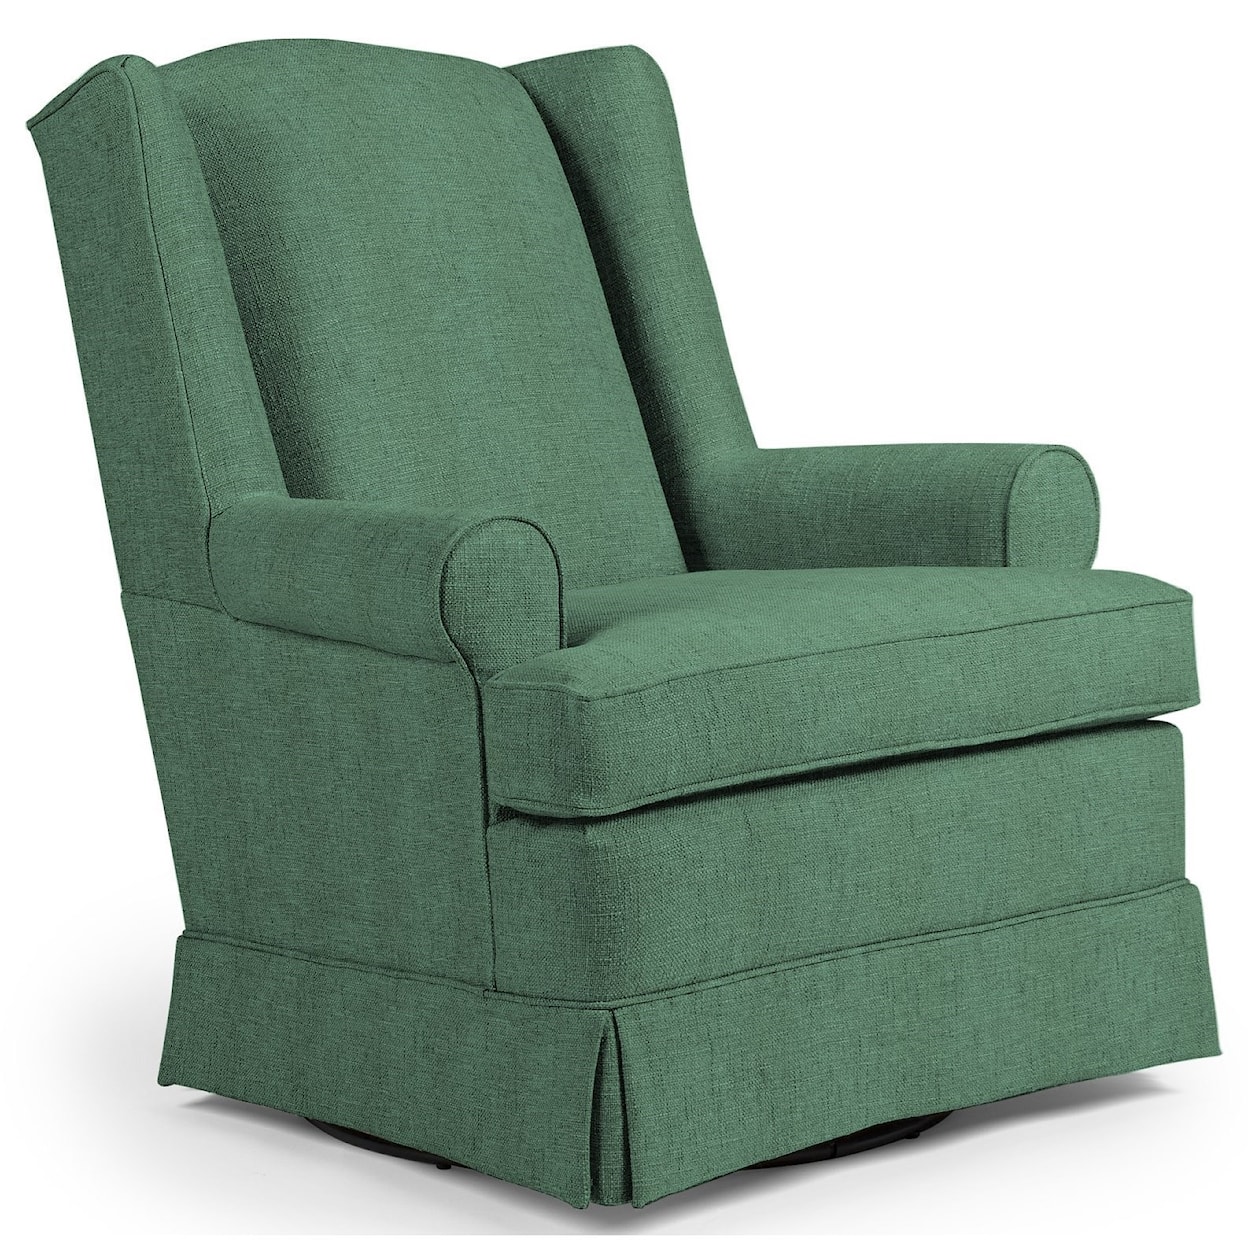 Bravo Furniture Roni Roni Swivel Glider Chair